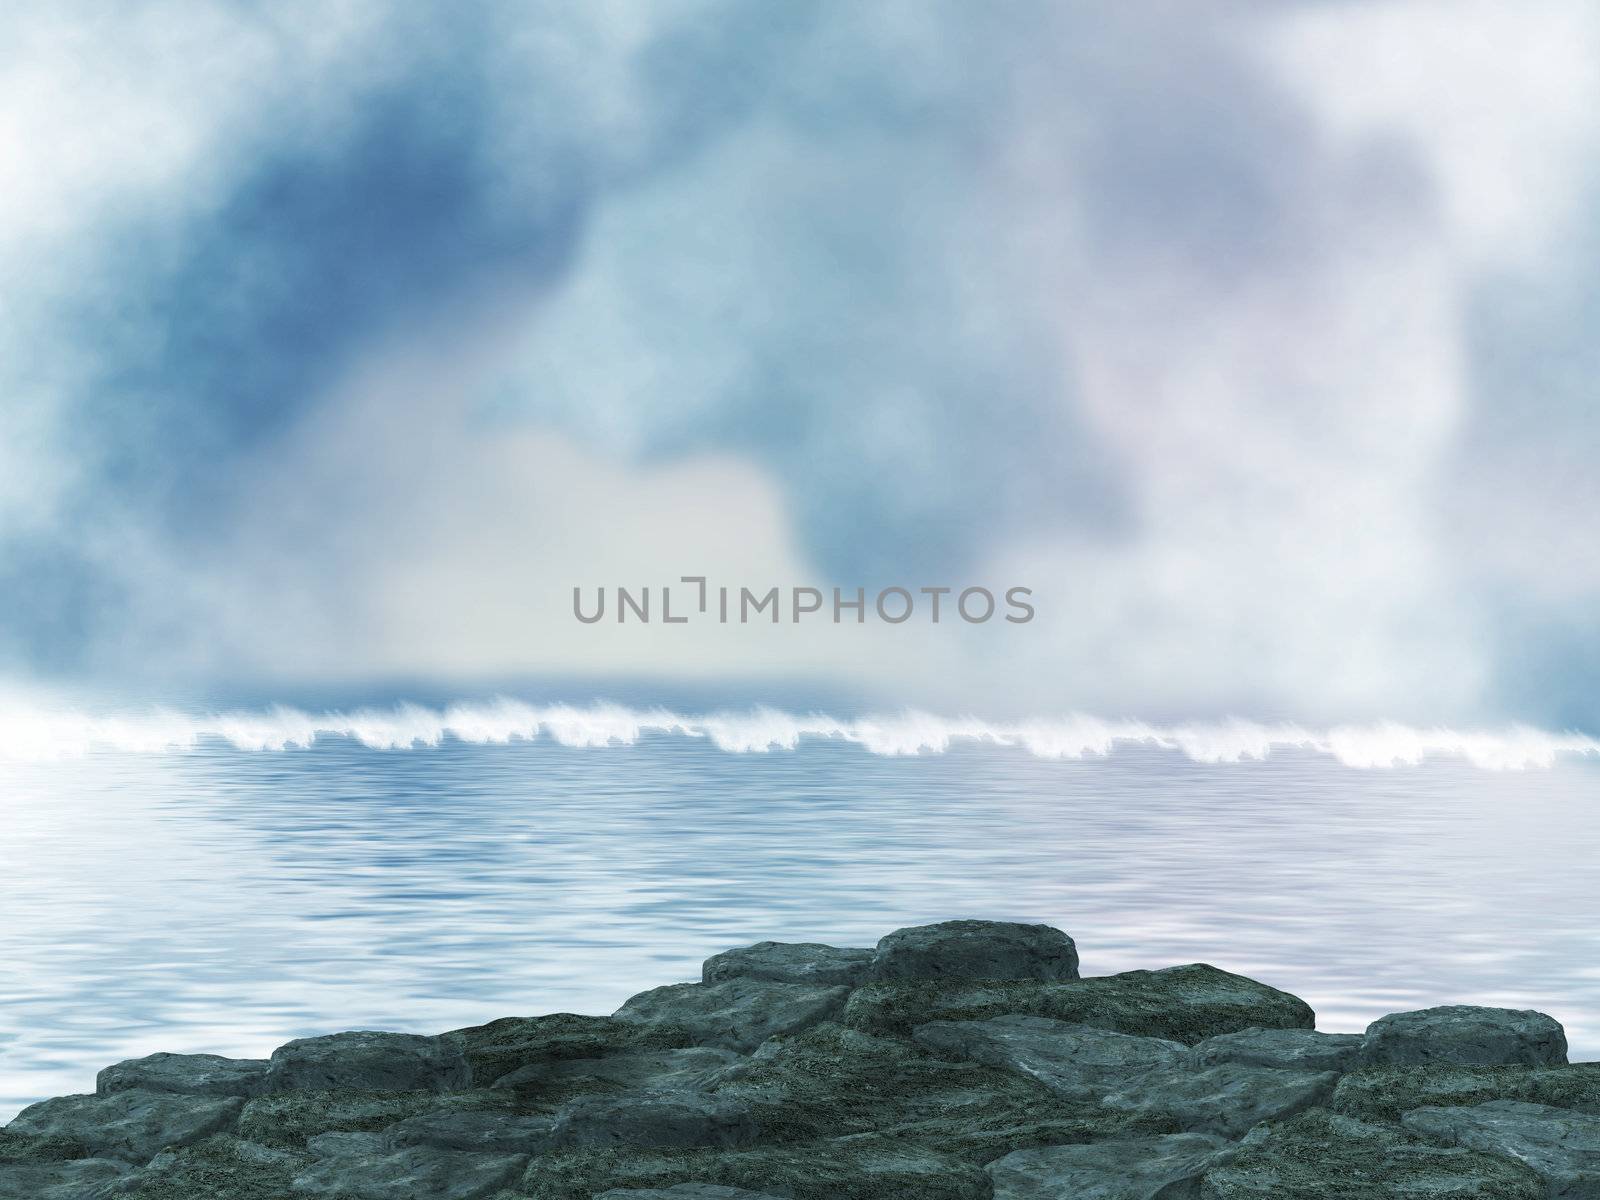 Ocean Background by kathygold